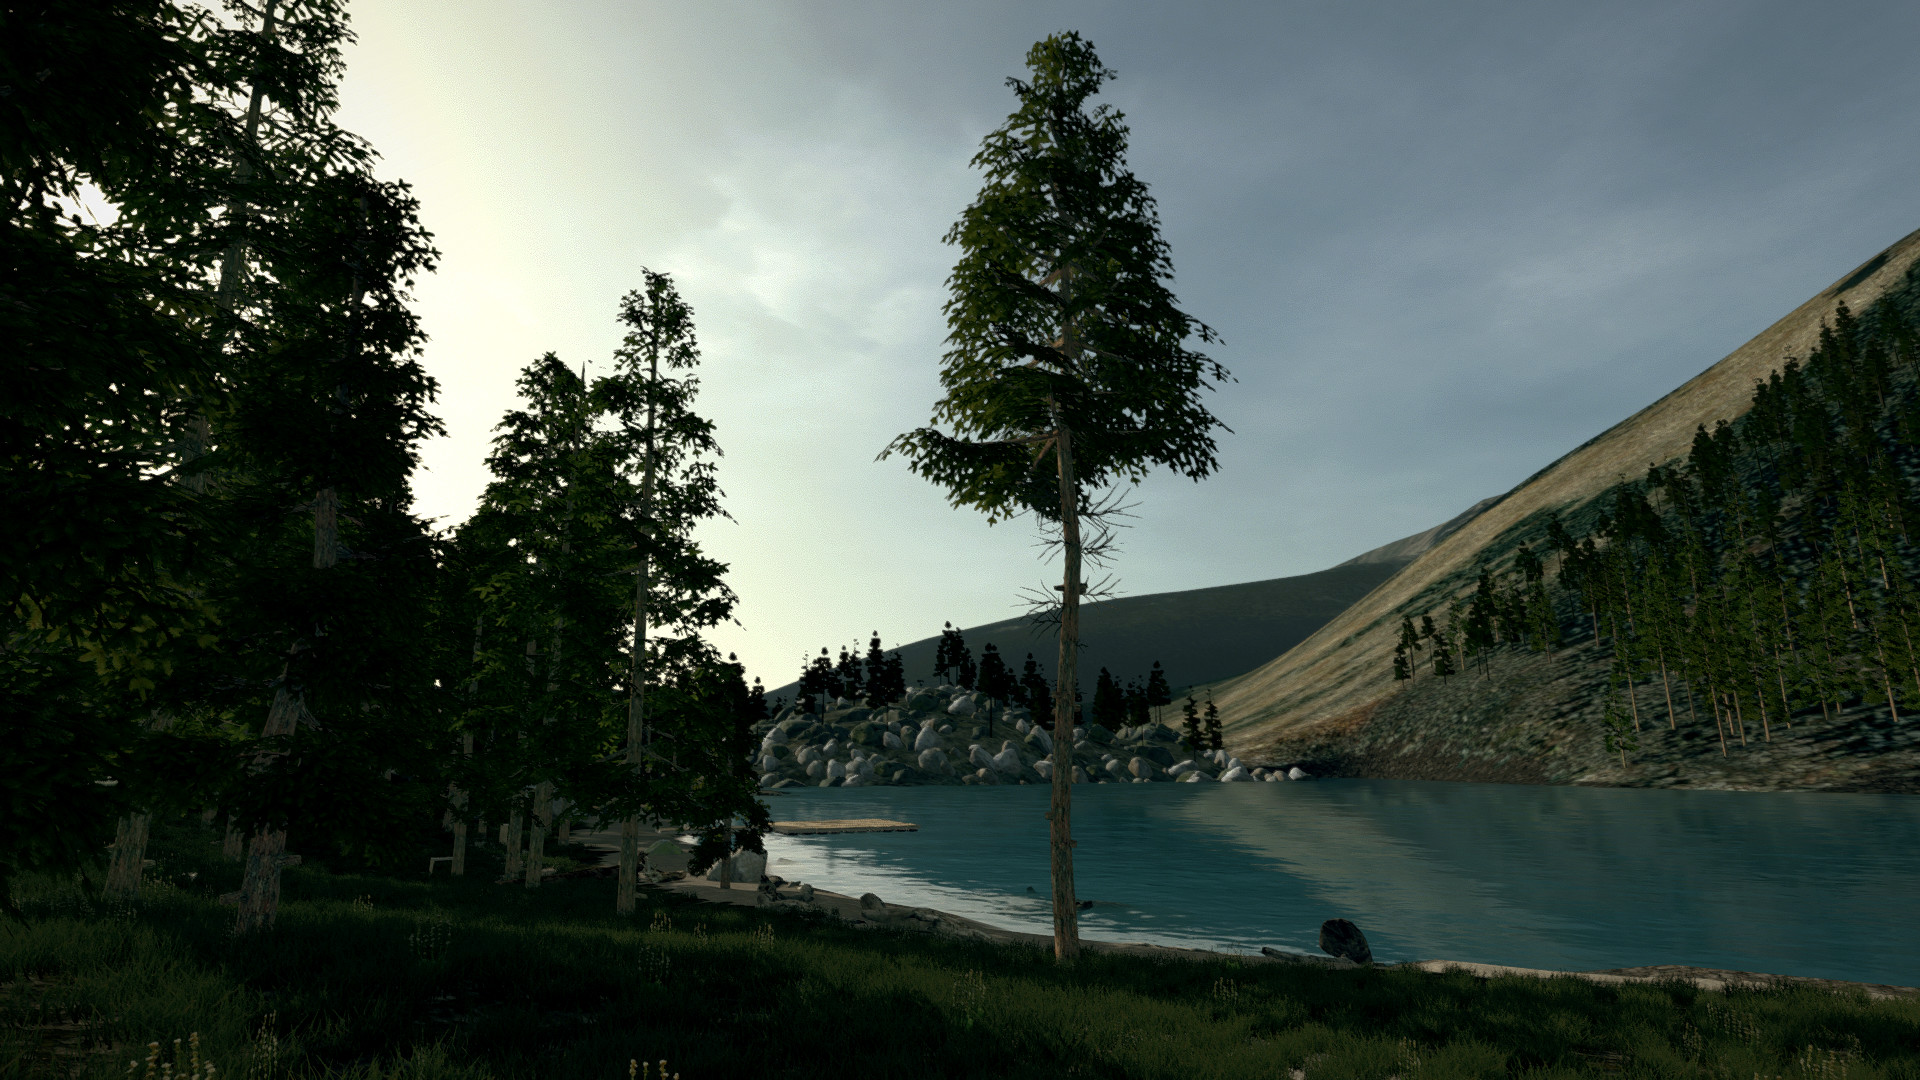 Save 60% on Ultimate Fishing Simulator - Moraine Lake DLC on Steam